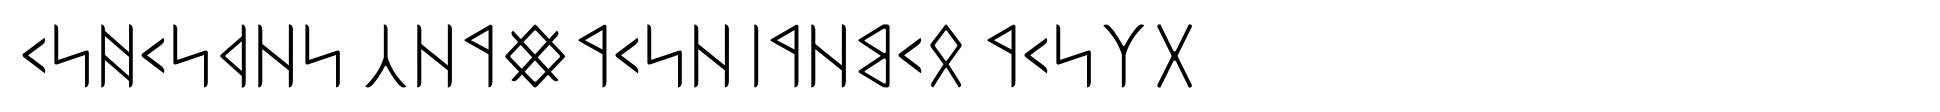 Ongunkan Wardruna Arabic Runes